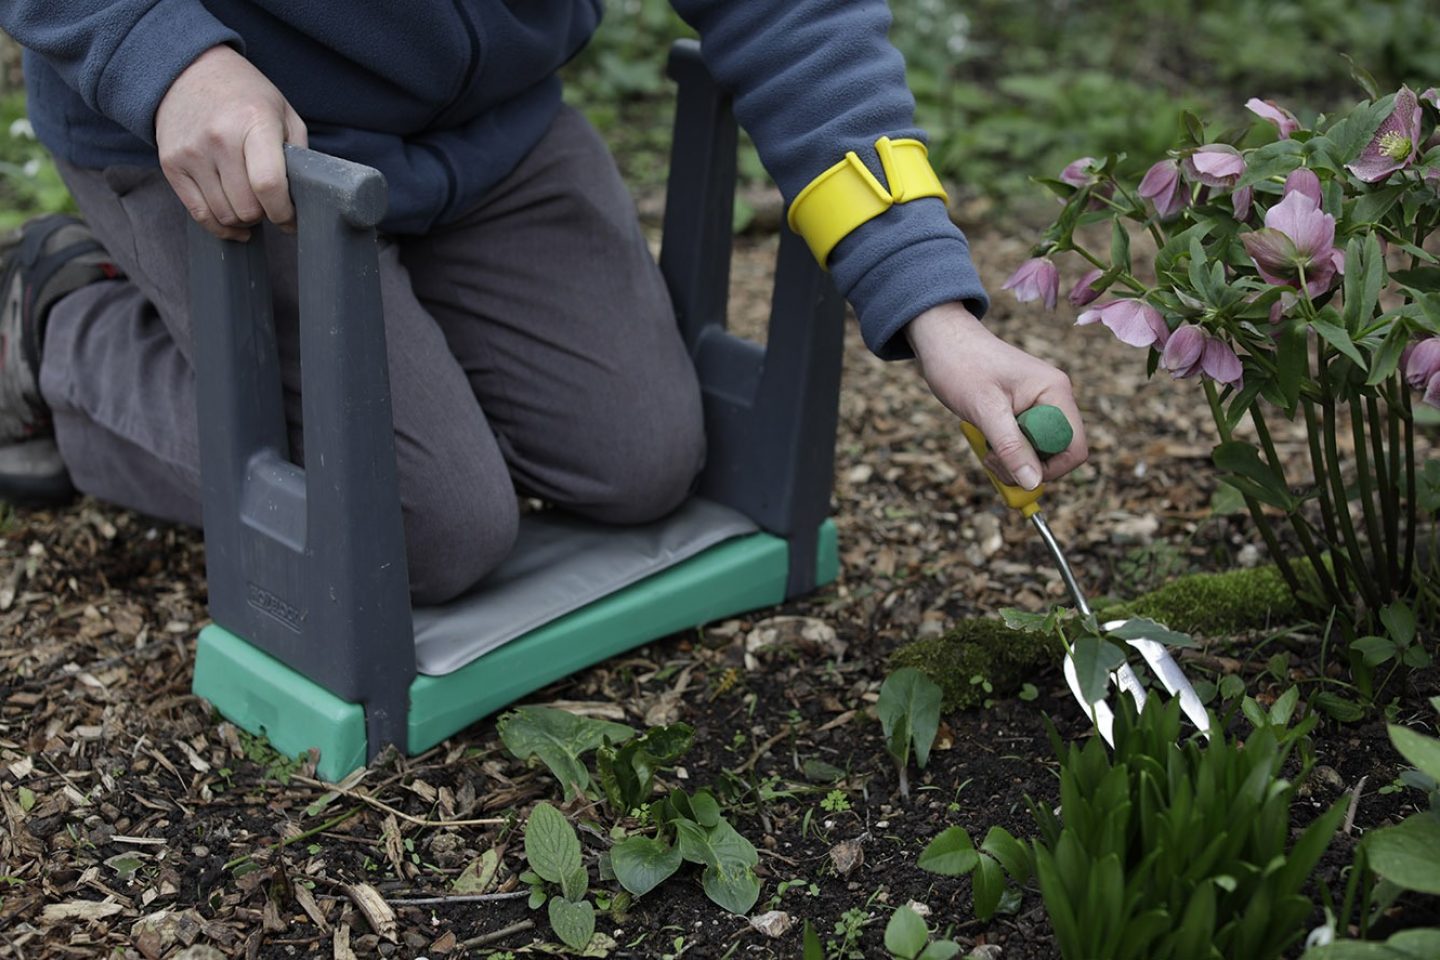 https://www.thrive.org.uk/files/images/Gardening-advice/Gardening-tools/_large/gardener-kneeler-handles-fork-arm-support.jpg